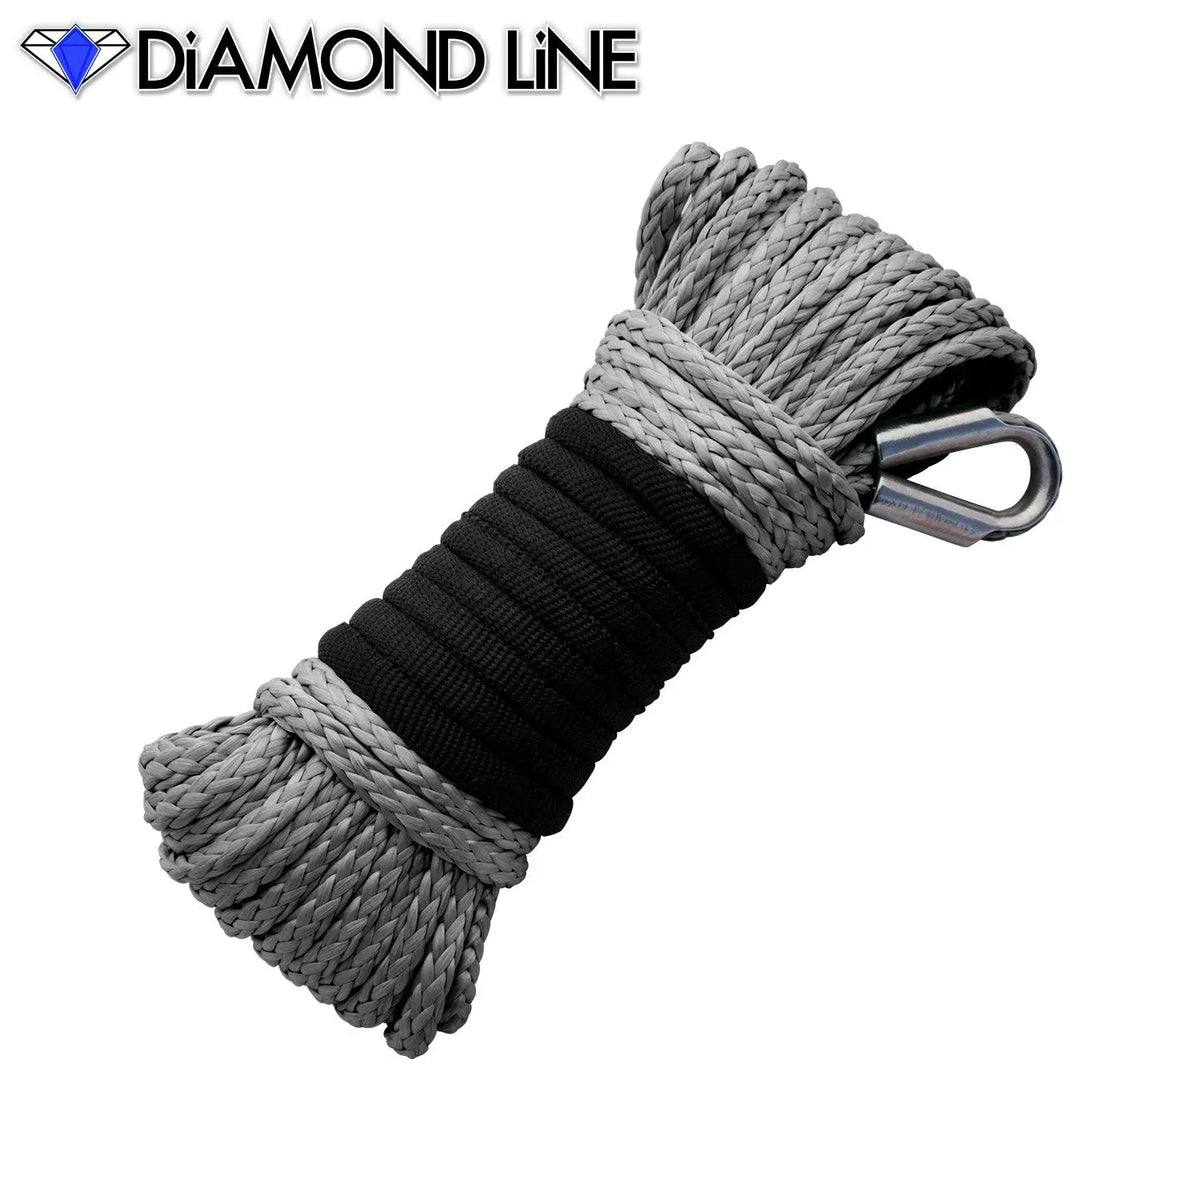 3/16" x 50' Diamond Line Winch Rope Mainline - Gray.